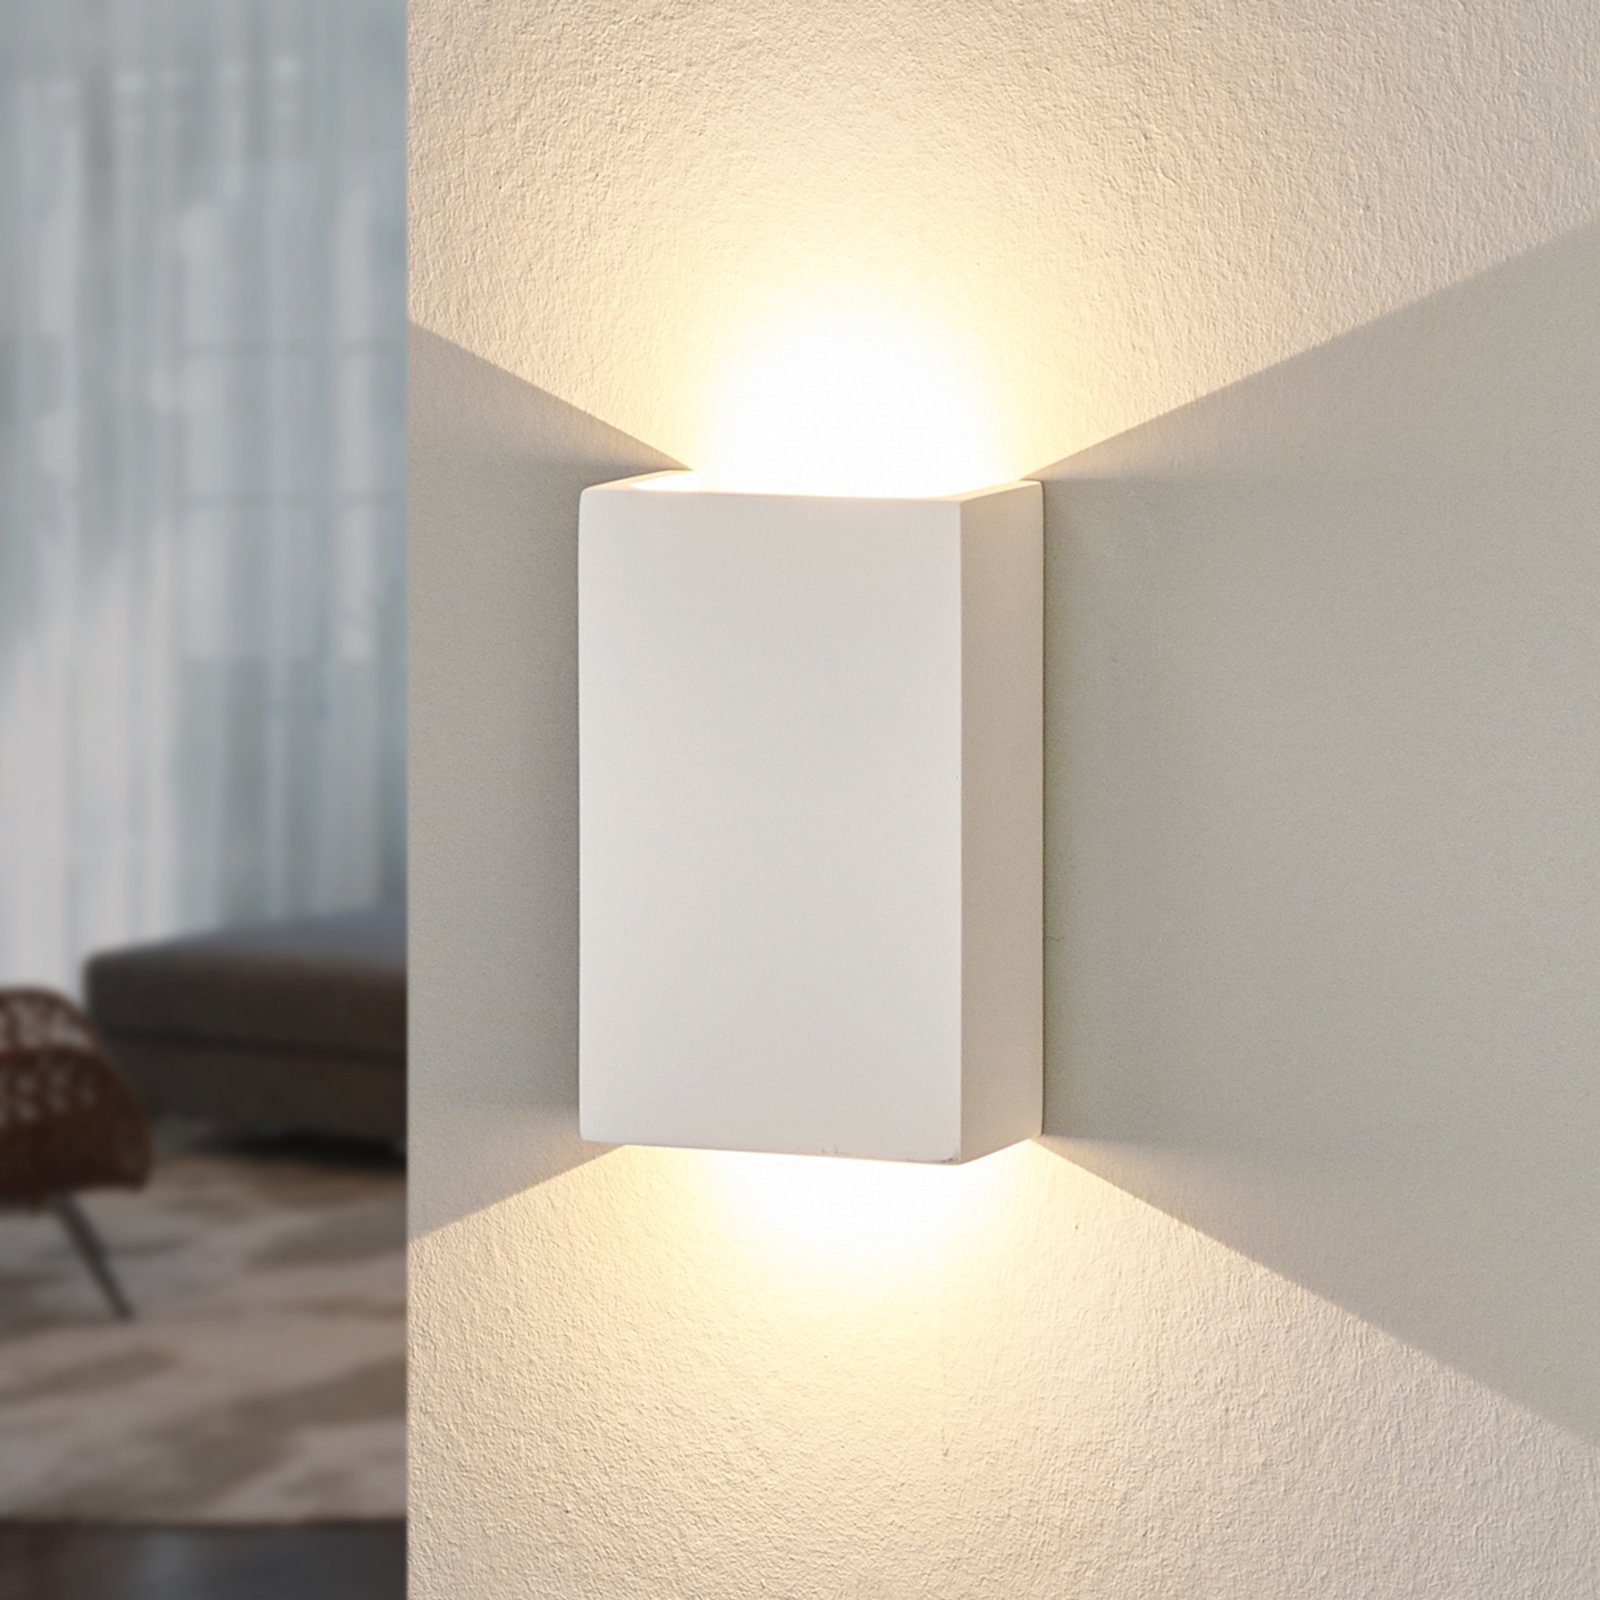 Fabiola LED fali lámpa gipszből, magassága 16 cm